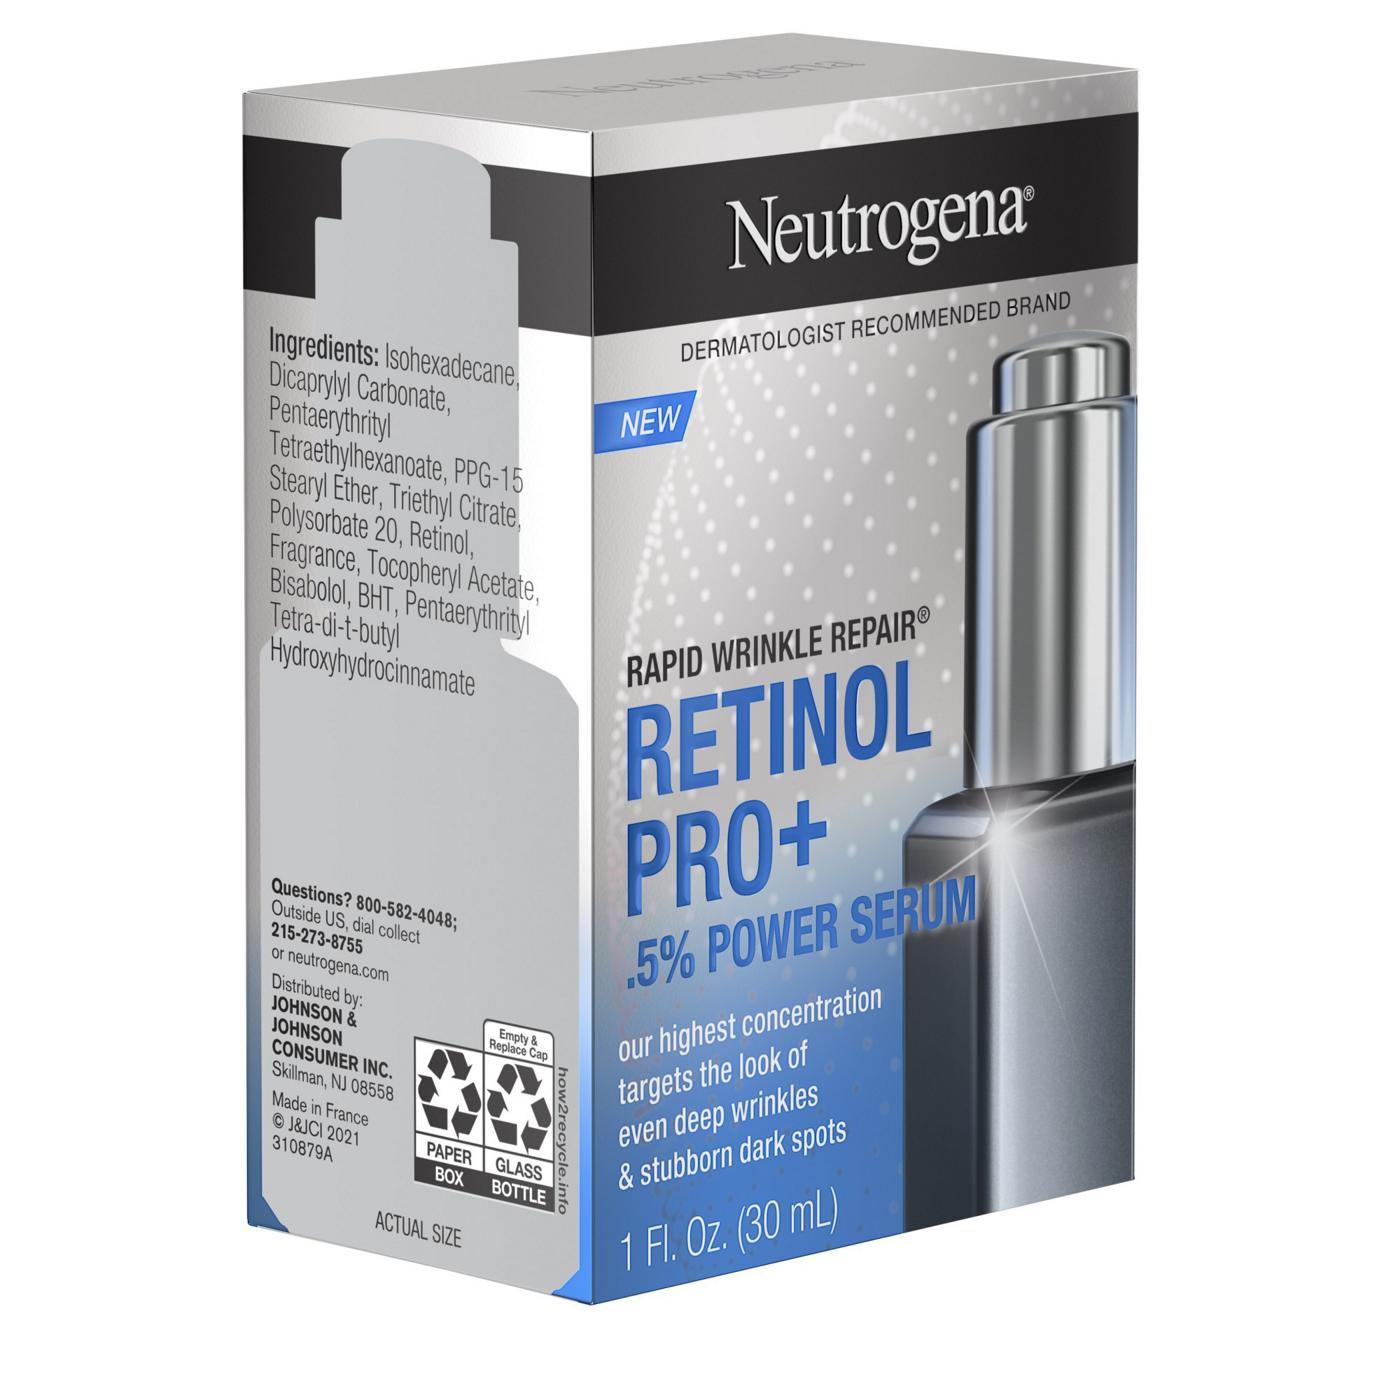 Neutrogena Rapid Wrinkle Repair Retinol Pro+ .5% Power Serum; image 3 of 5